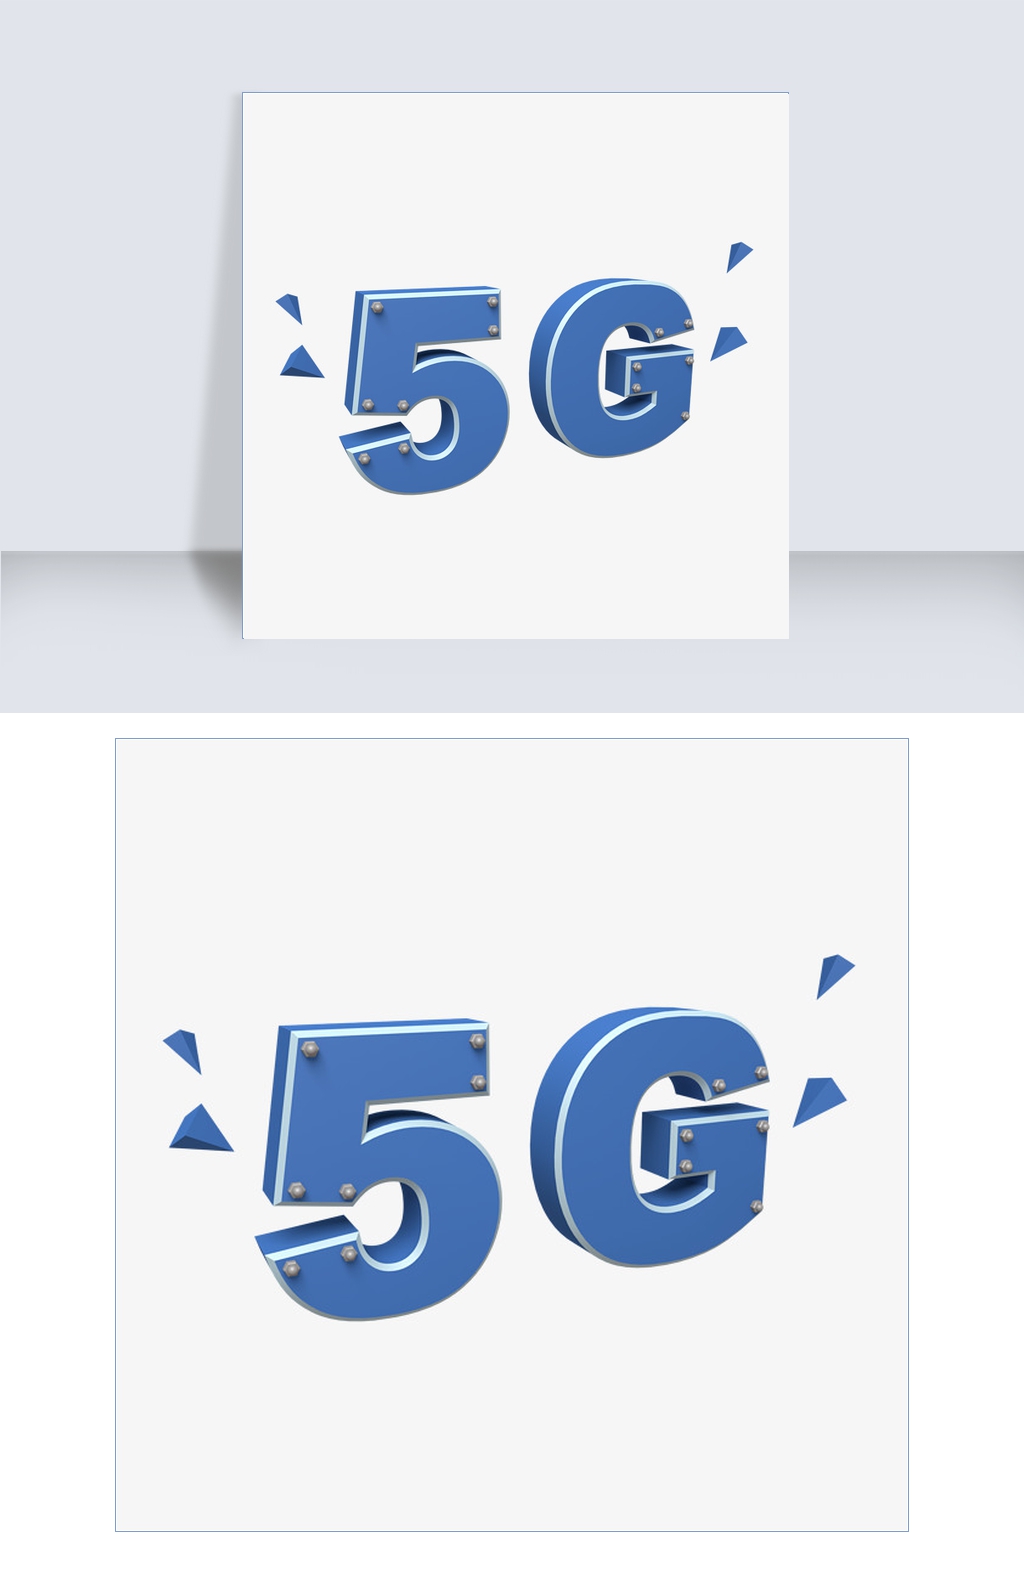 5G 网络 网络升级 通讯 信息服务